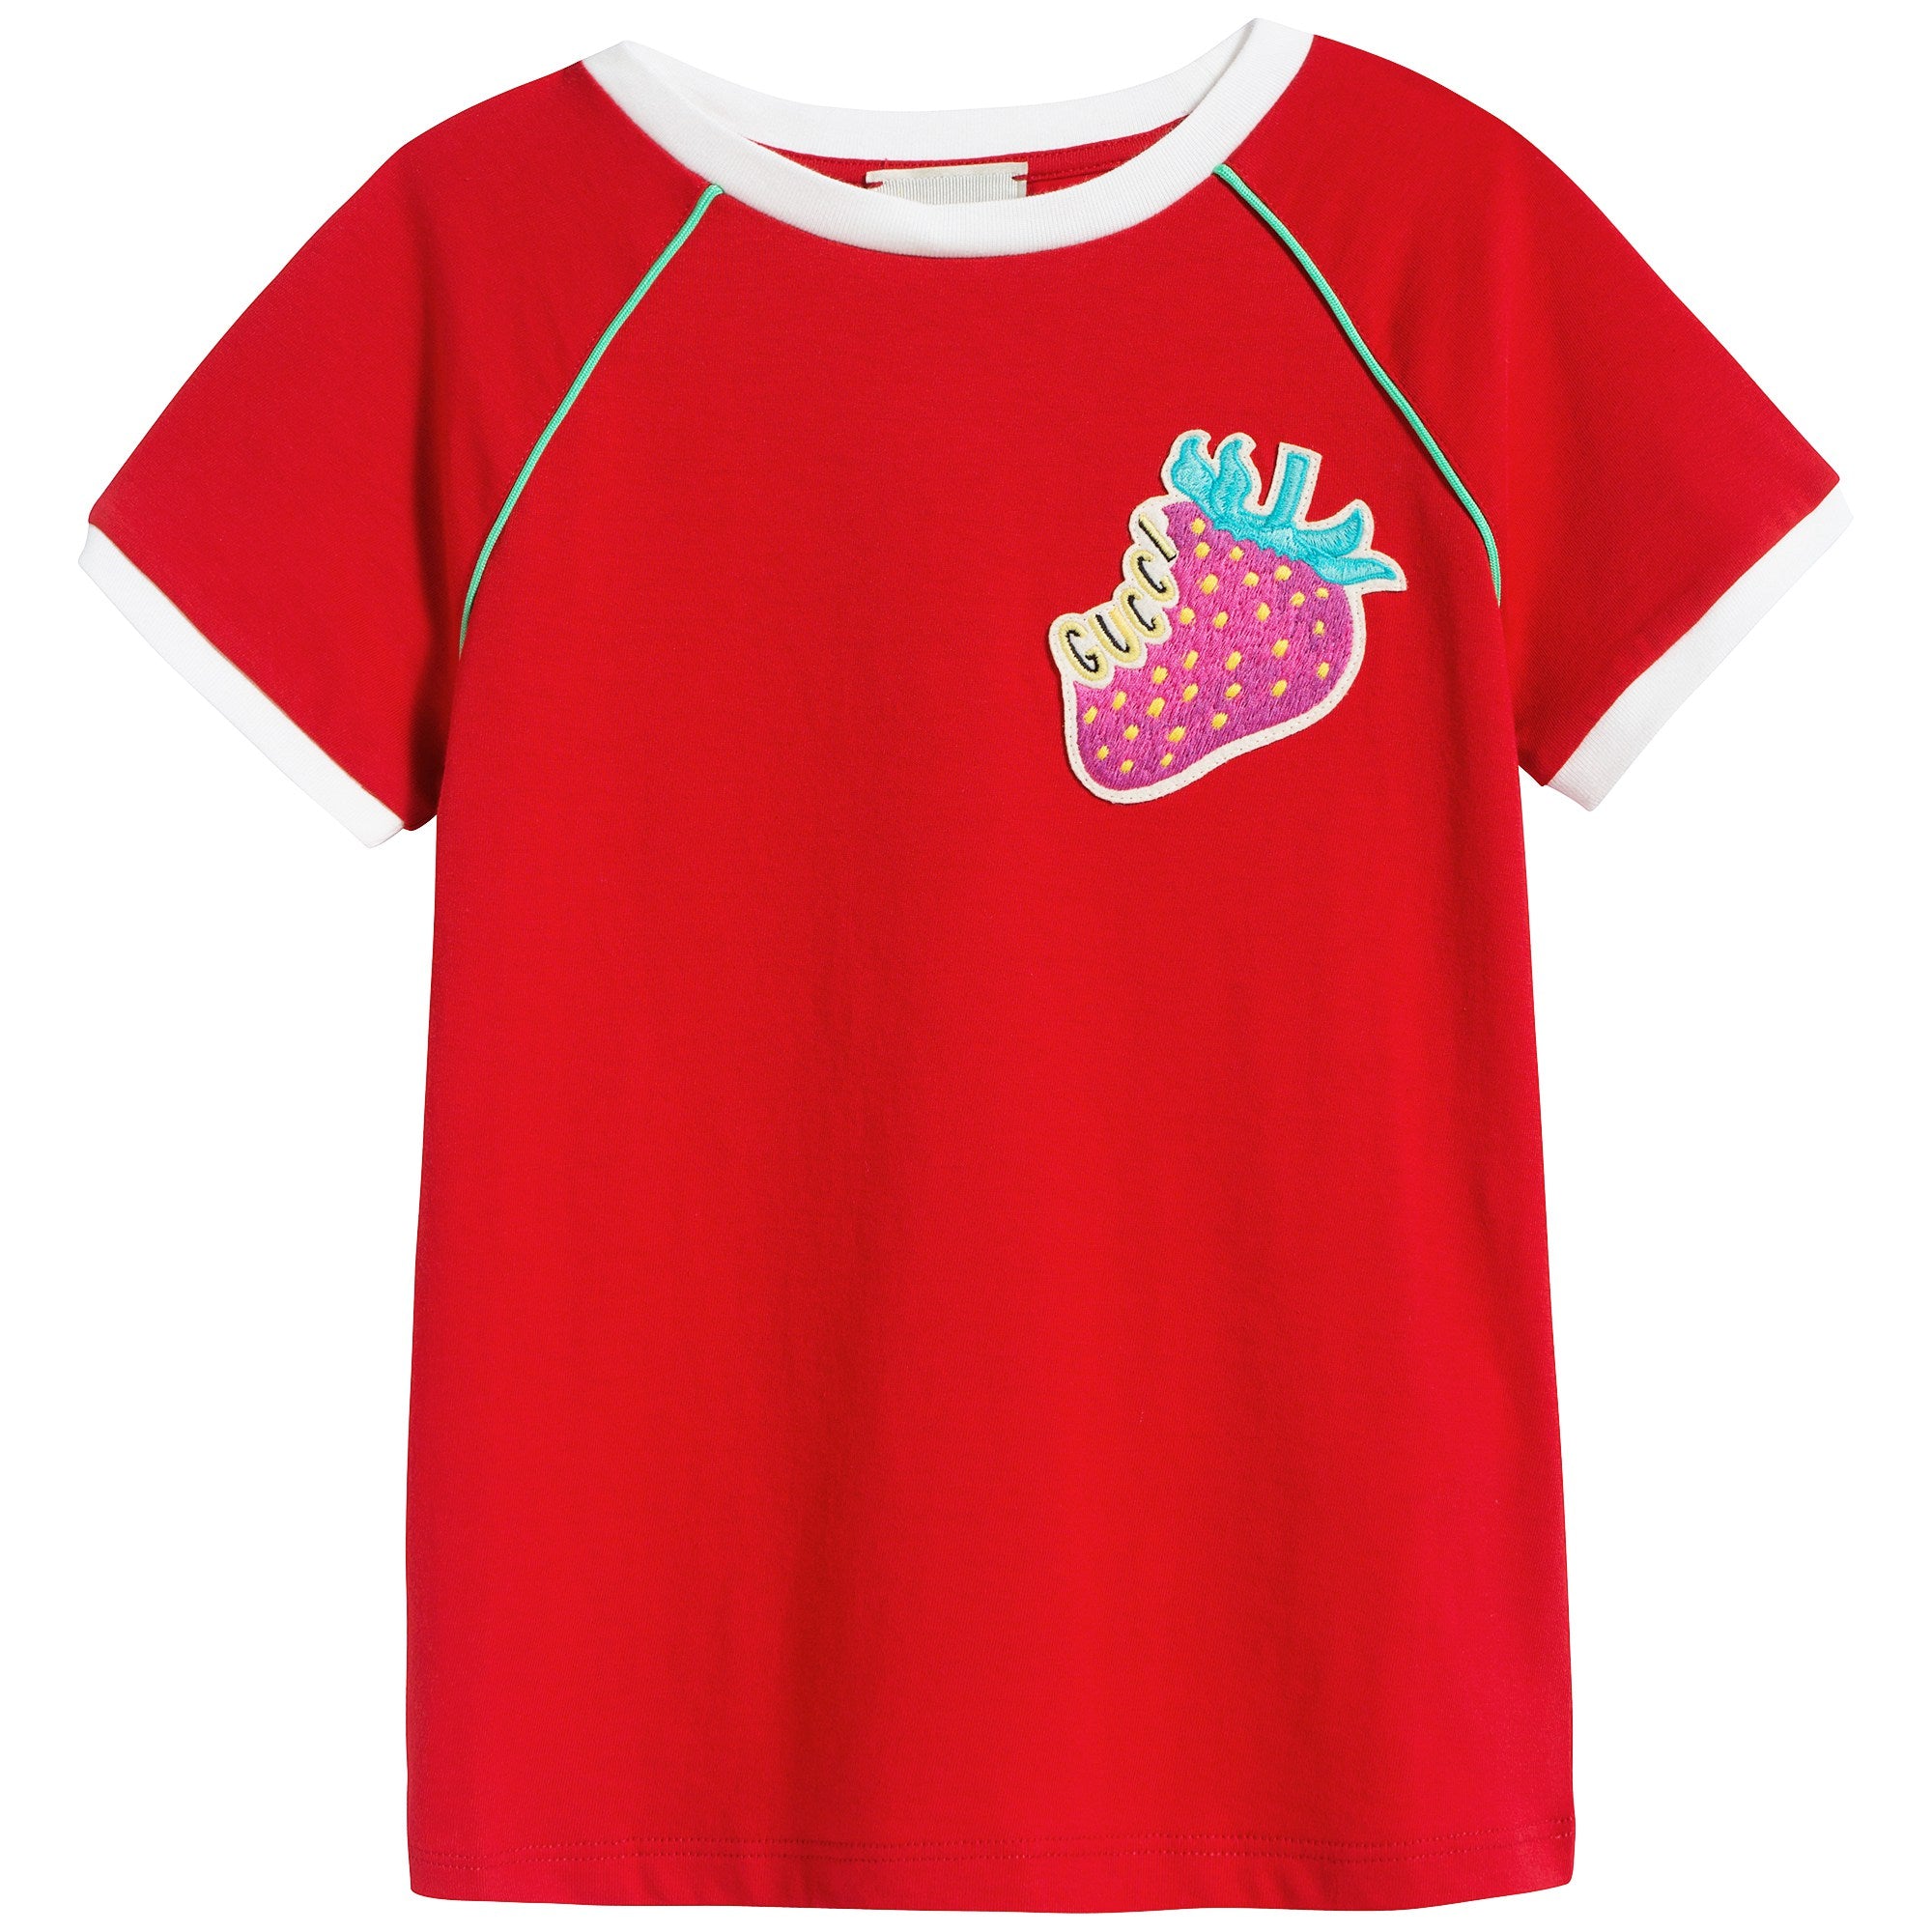 Girls Red Strawberry Cotton T-shirt